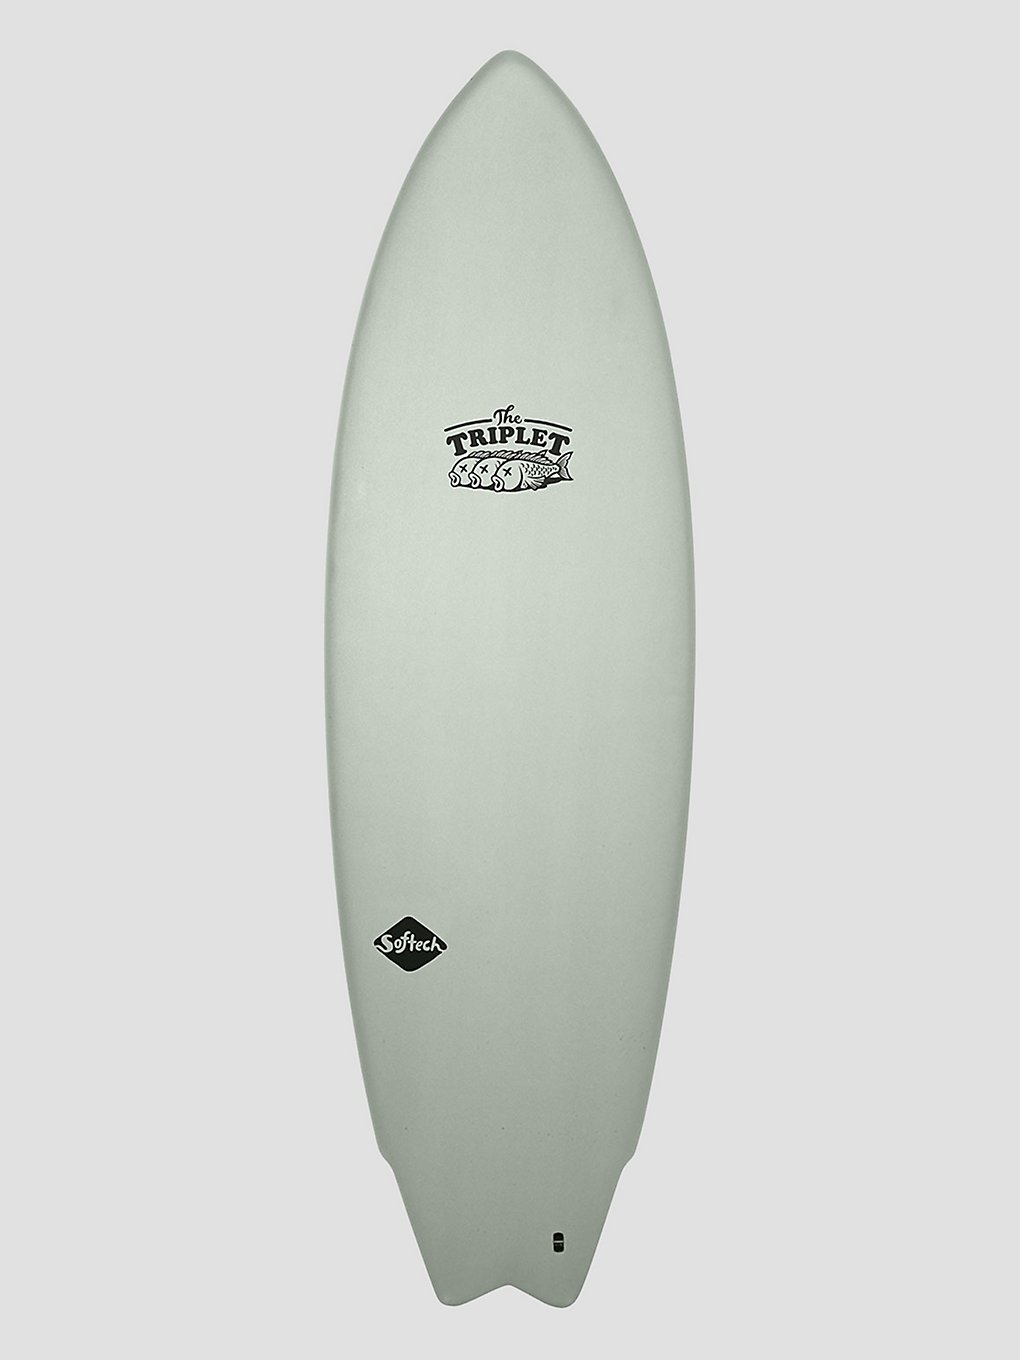 Softech The Triplet 5'8 Softtop Surfboard groen